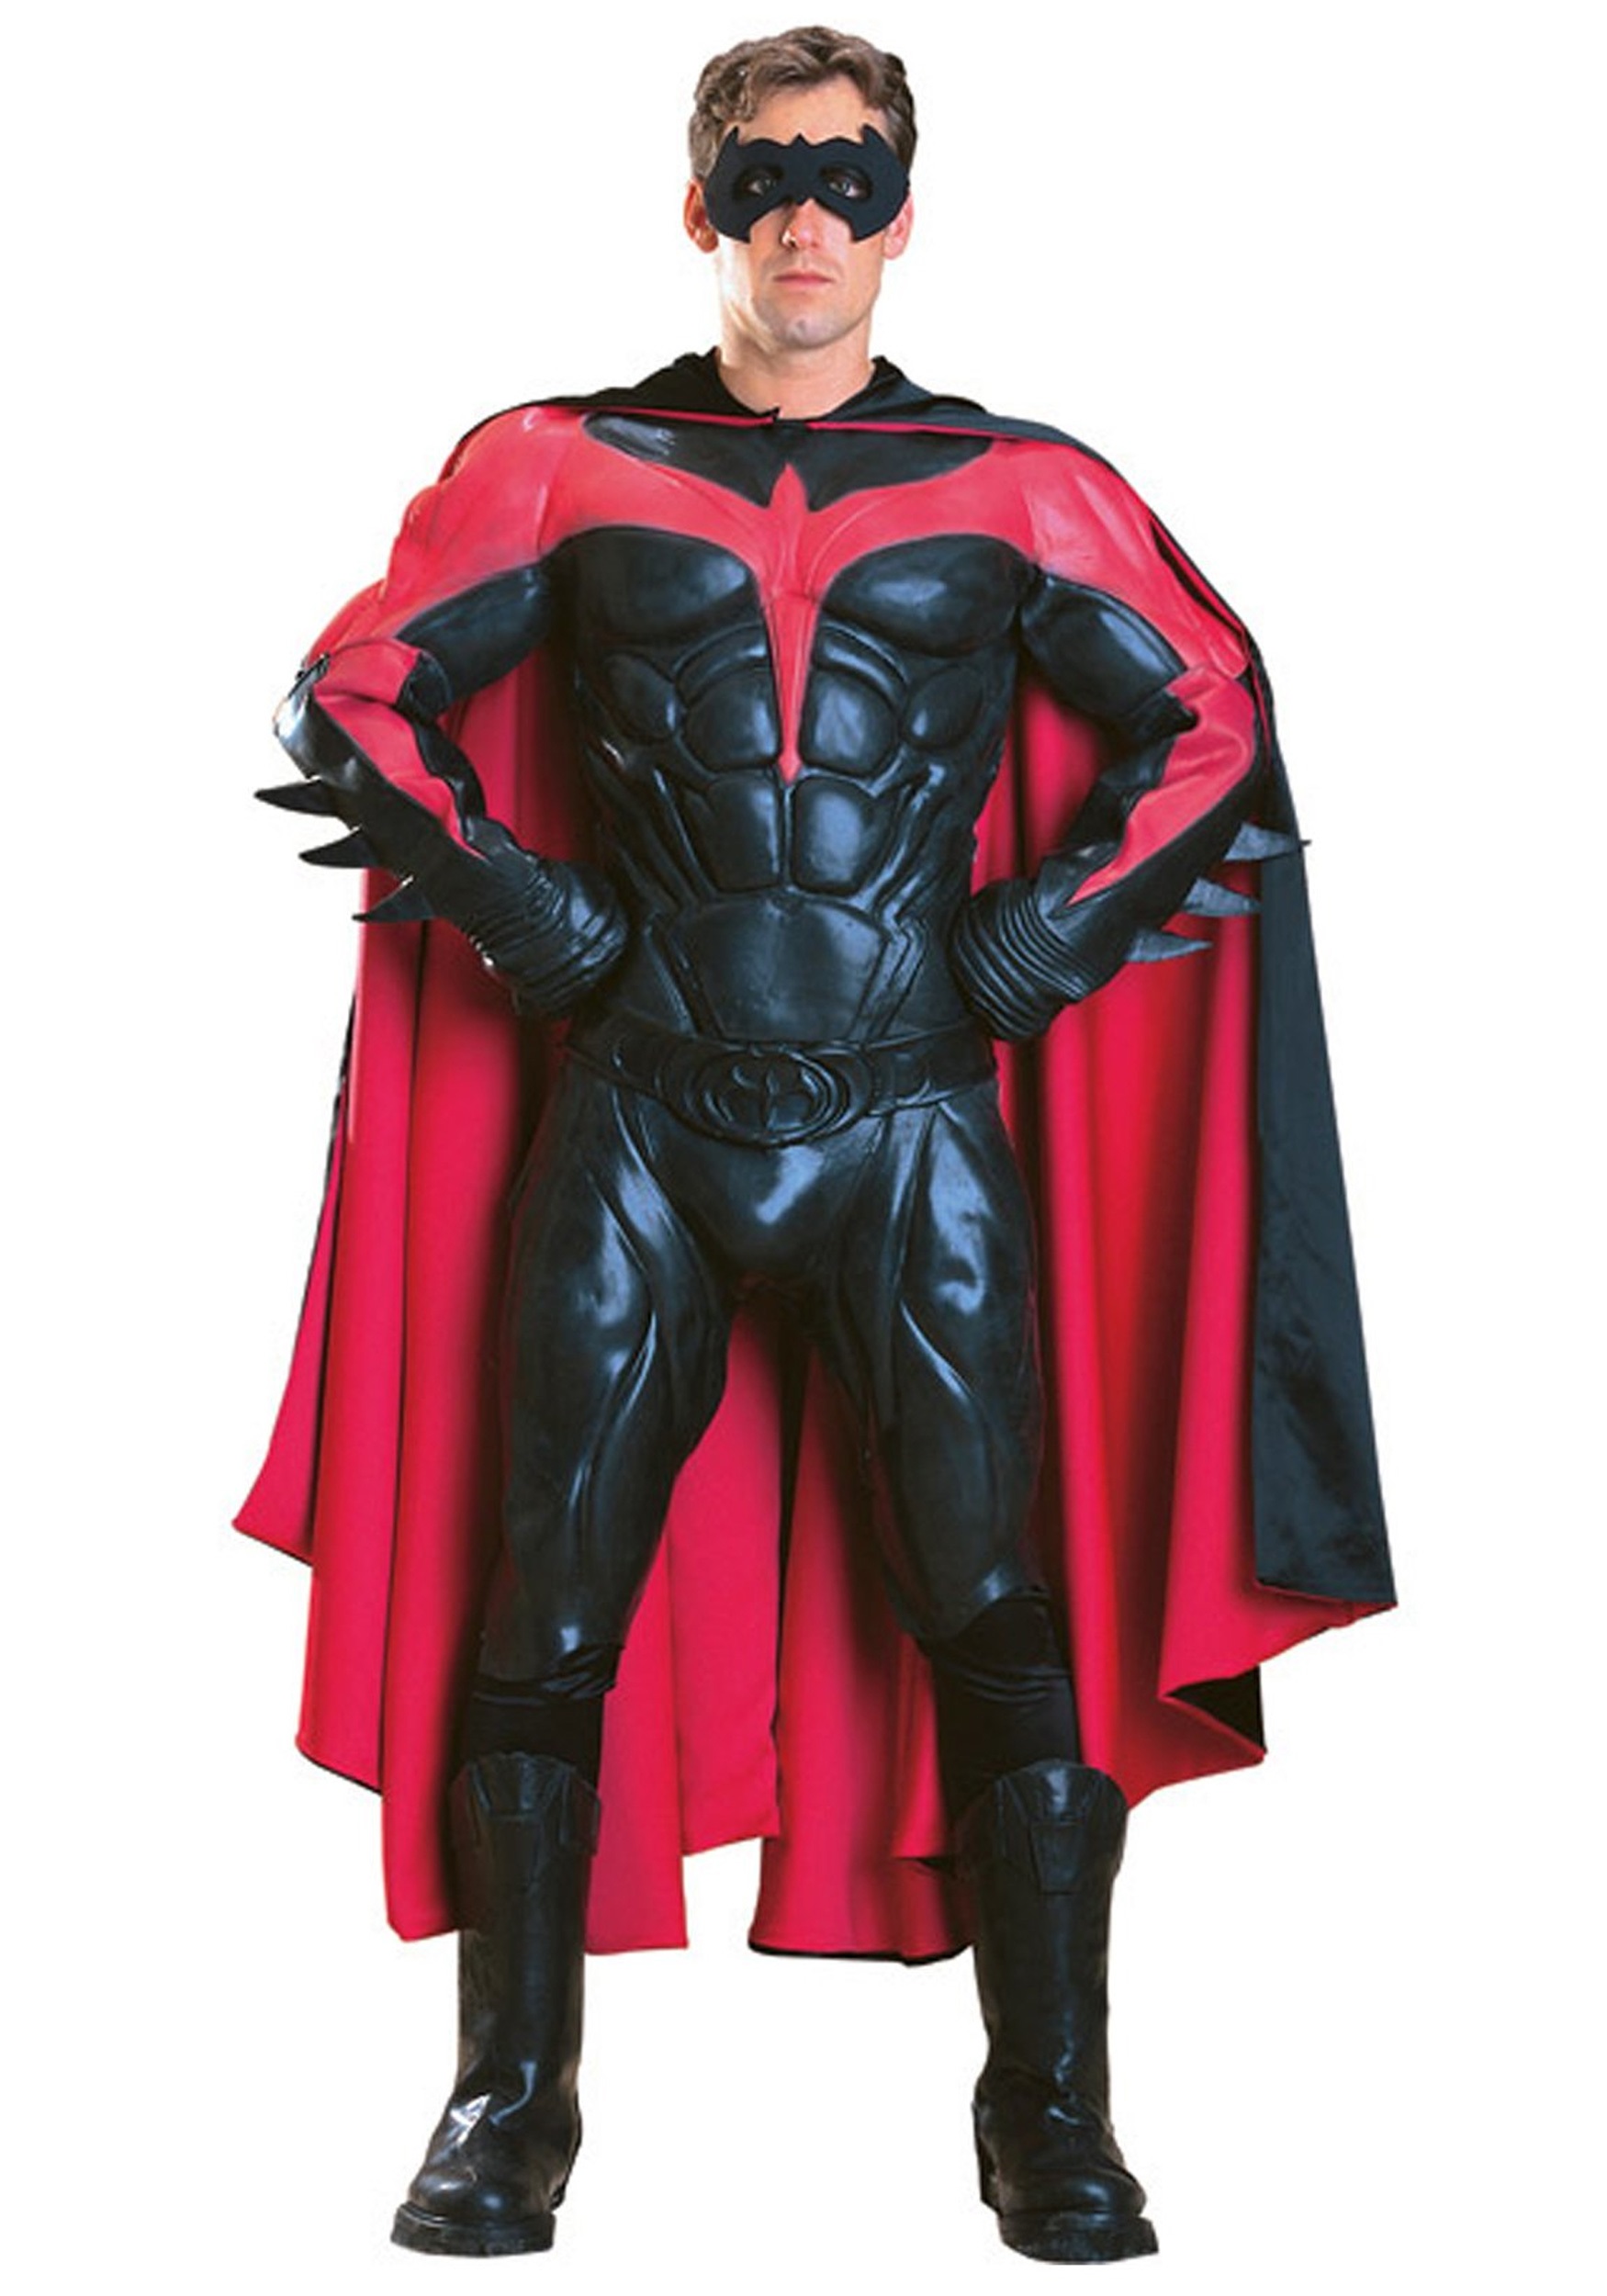 Batman Robin Red Hood Mask Adult Full Face Halloween Cosplay Mask Props Latex 